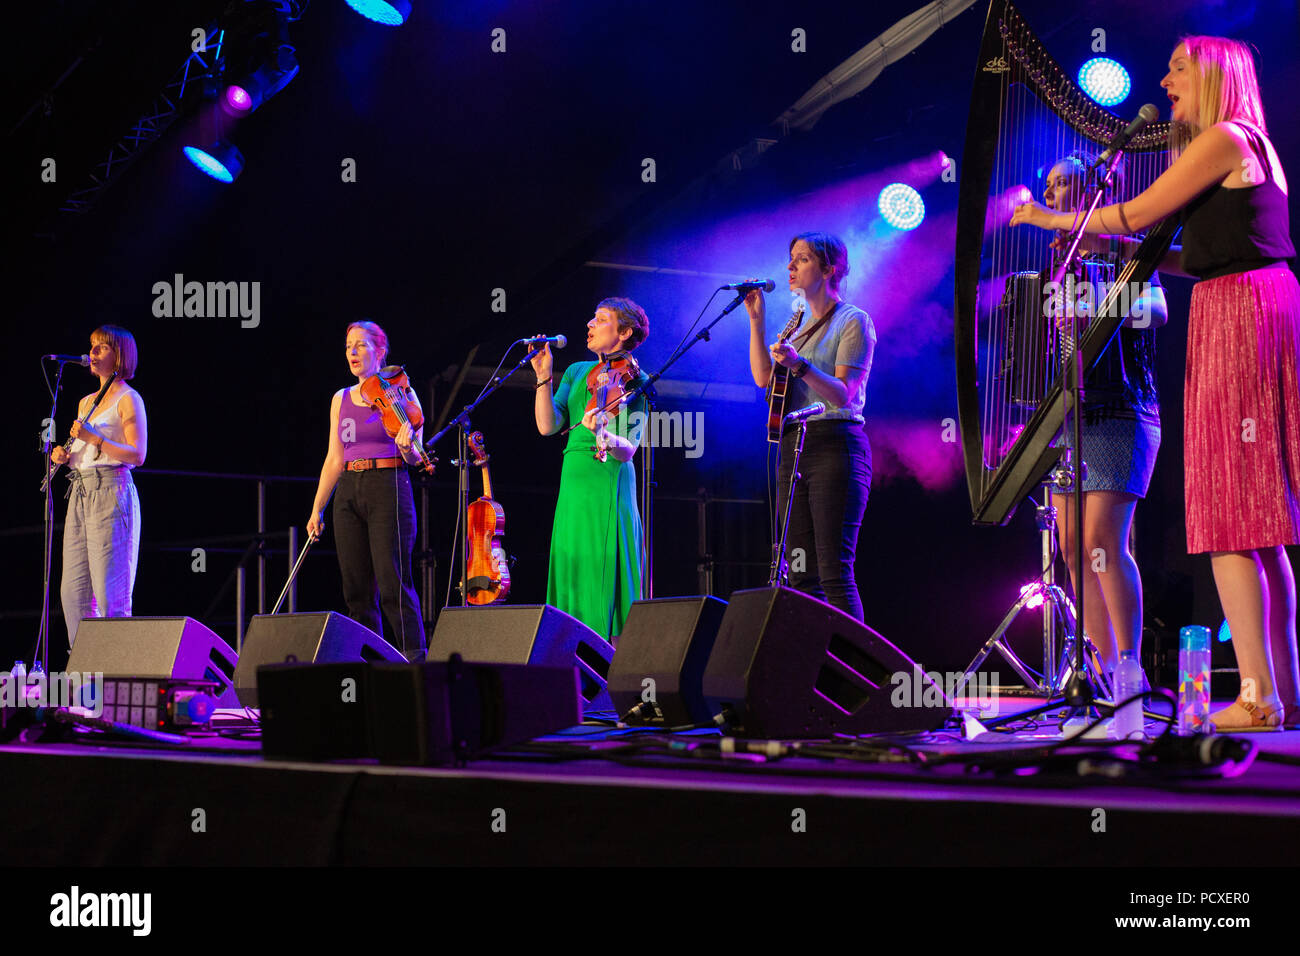 Cambridge, UK. 4th August, 2018. The Shee perform at the Cambridge Folk Festival 2018. Richard Etteridge / Alamy Live News Stock Photo